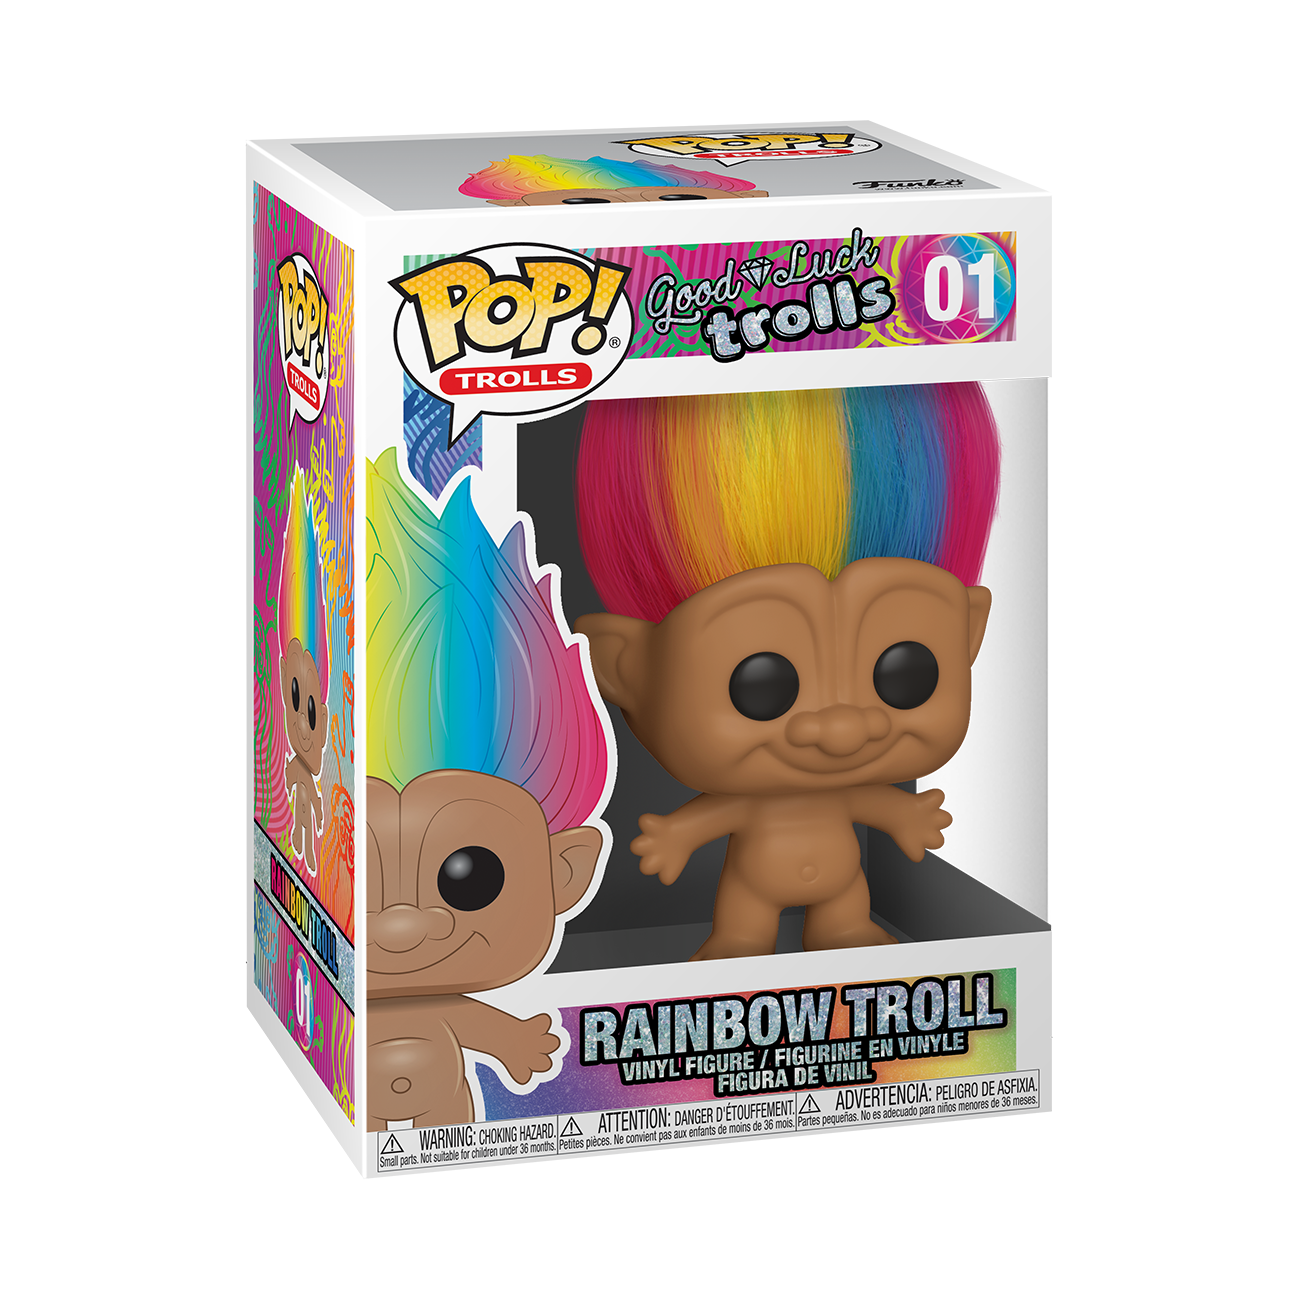 trolls-good-luck-trolls-rainbow-troll-01-funko-pop-kaufpreis-f-rdern